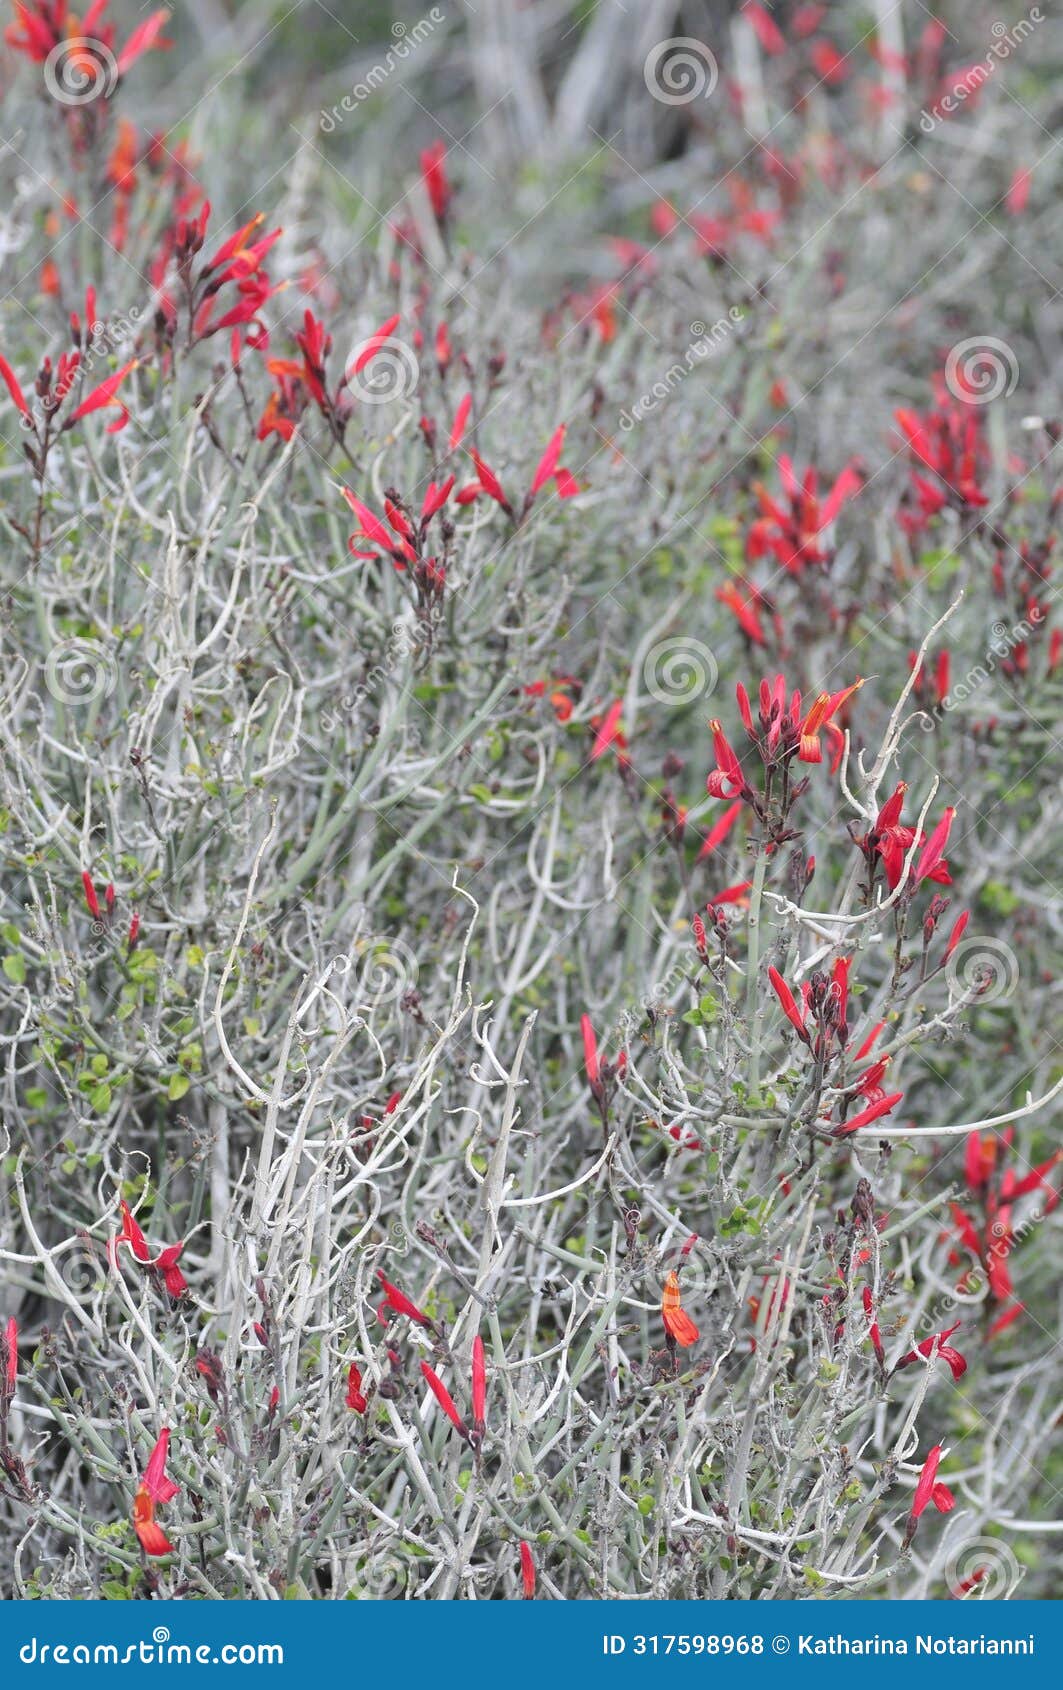 california wildflowers series - anza borrego desert state park - chuparosa - justicia californica